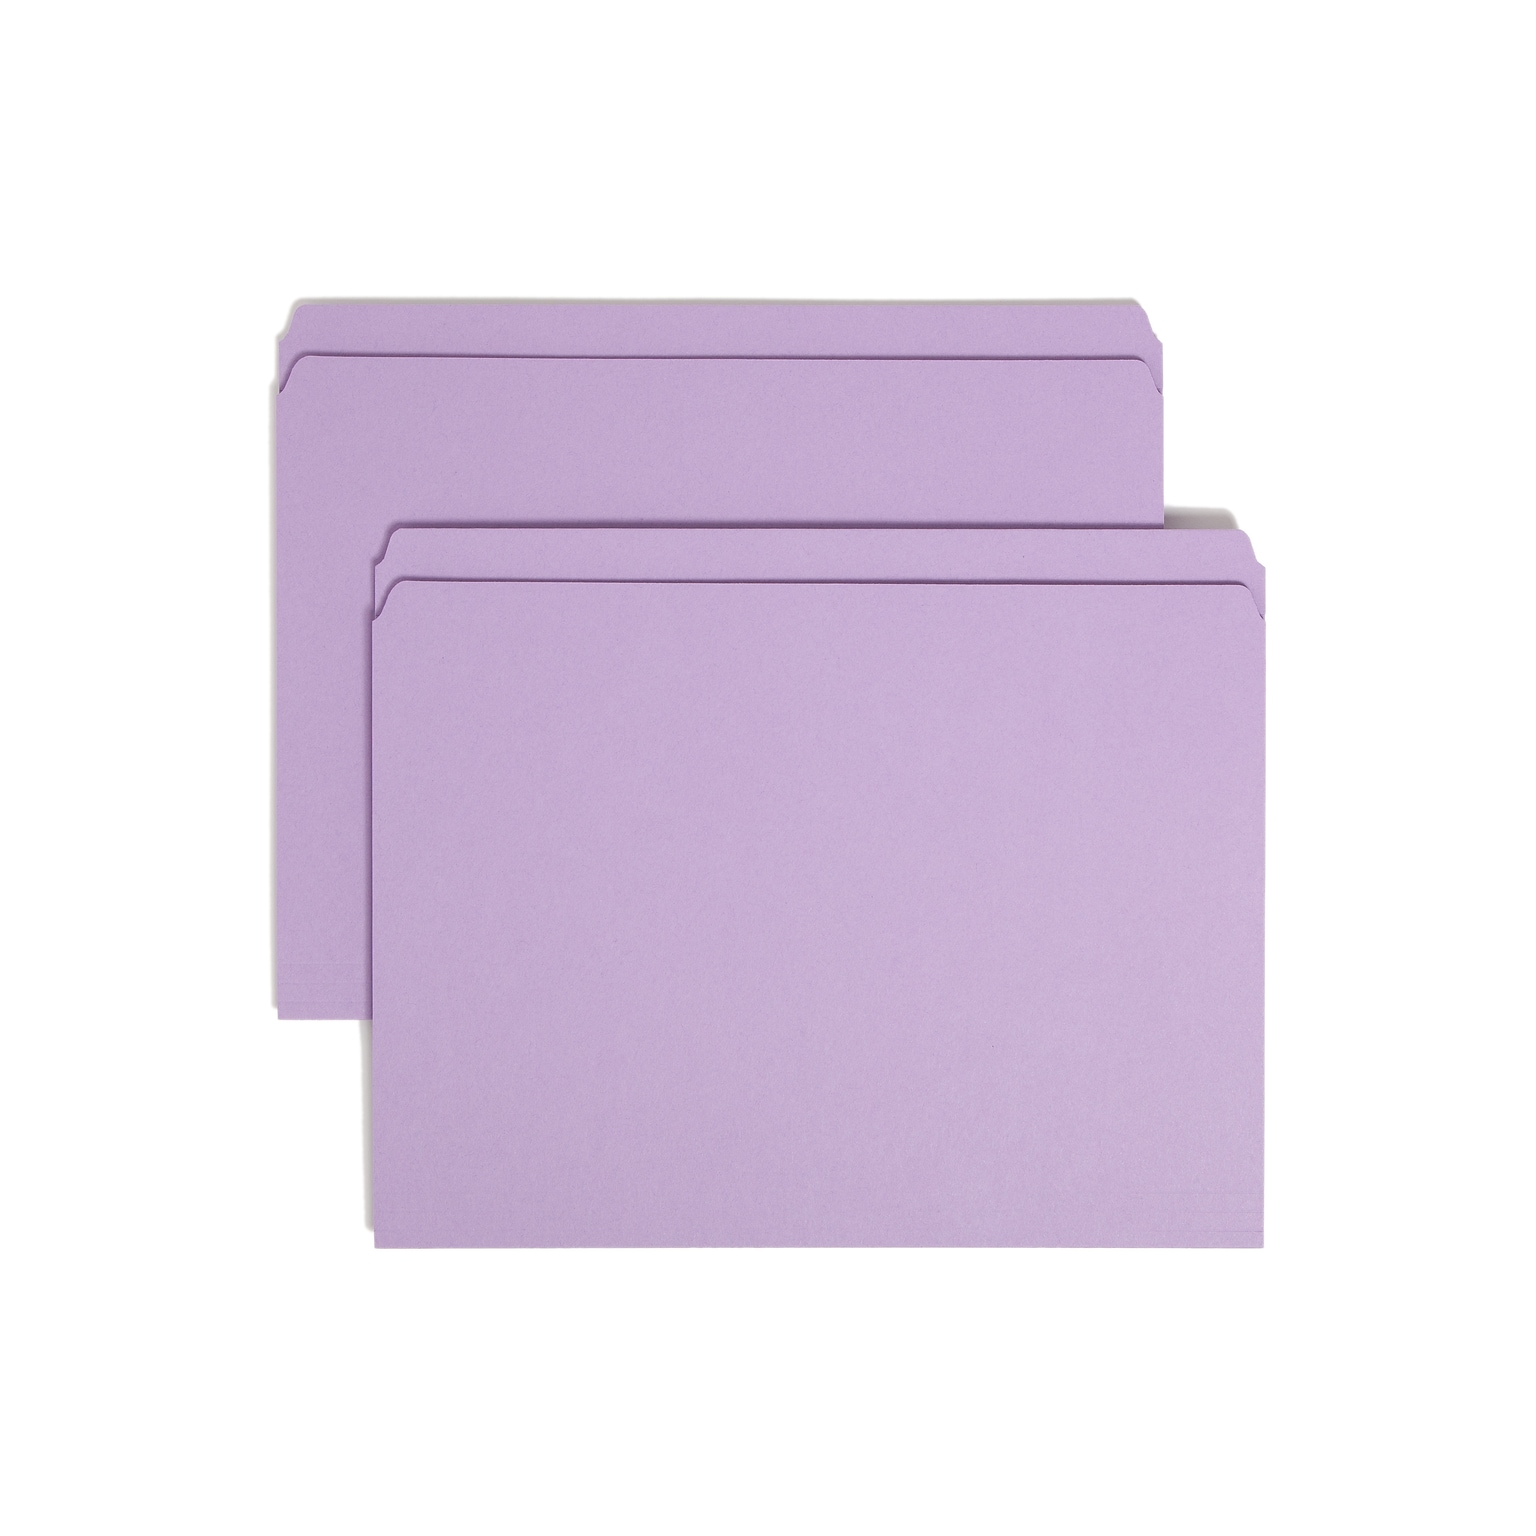 Smead File Folders, 1-Tab, Letter Size, Purple, 100/Box (12410)